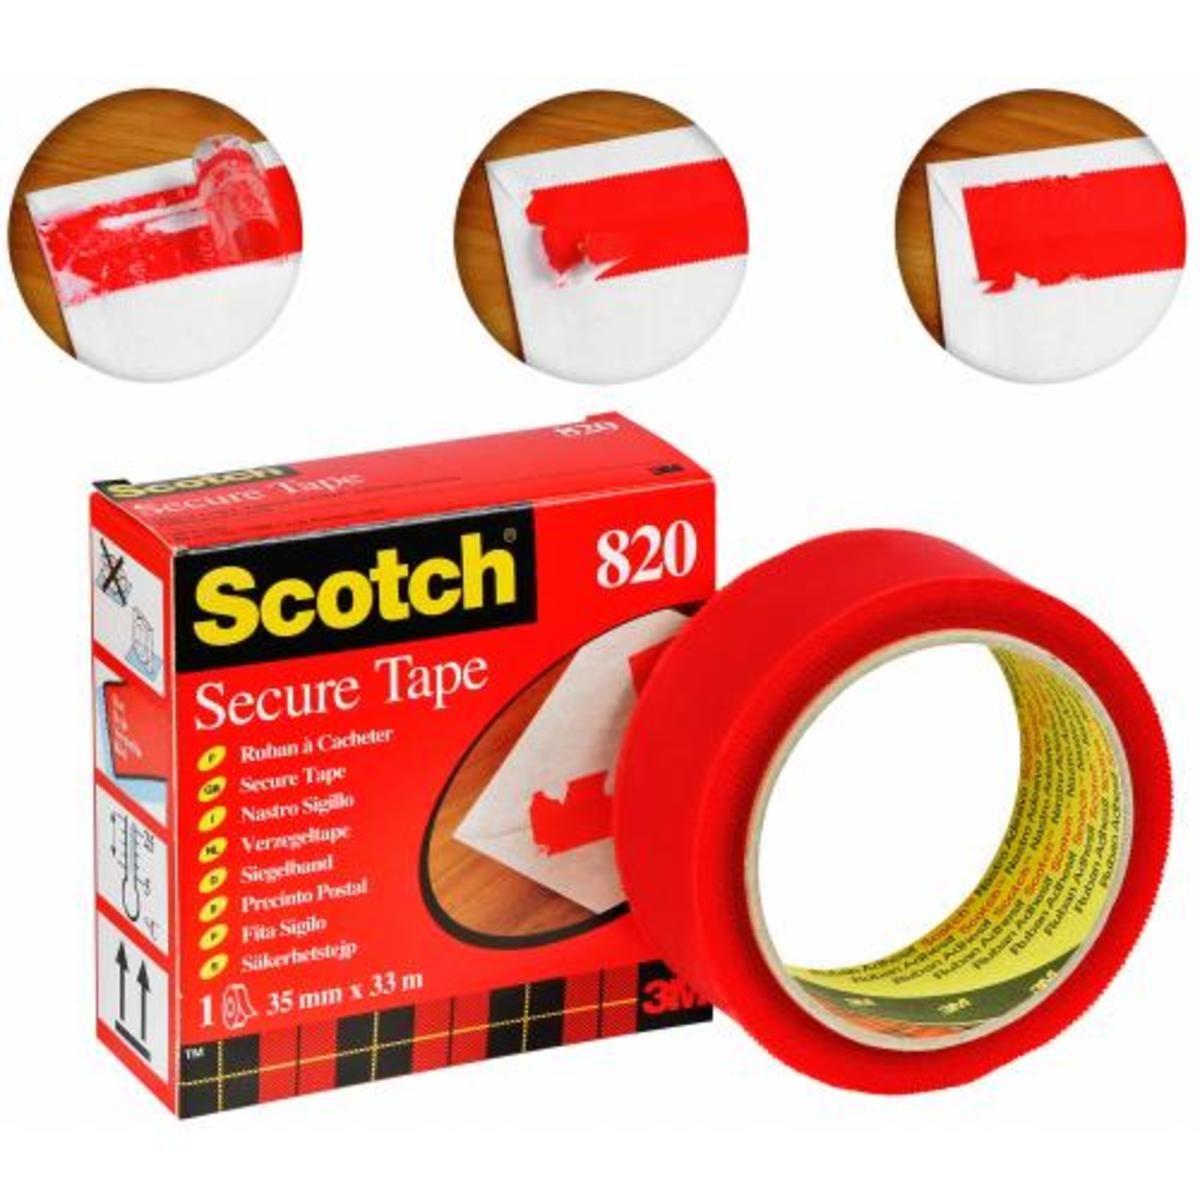 Scotch Ruban à cacheter, rouge, 35mm x 33m